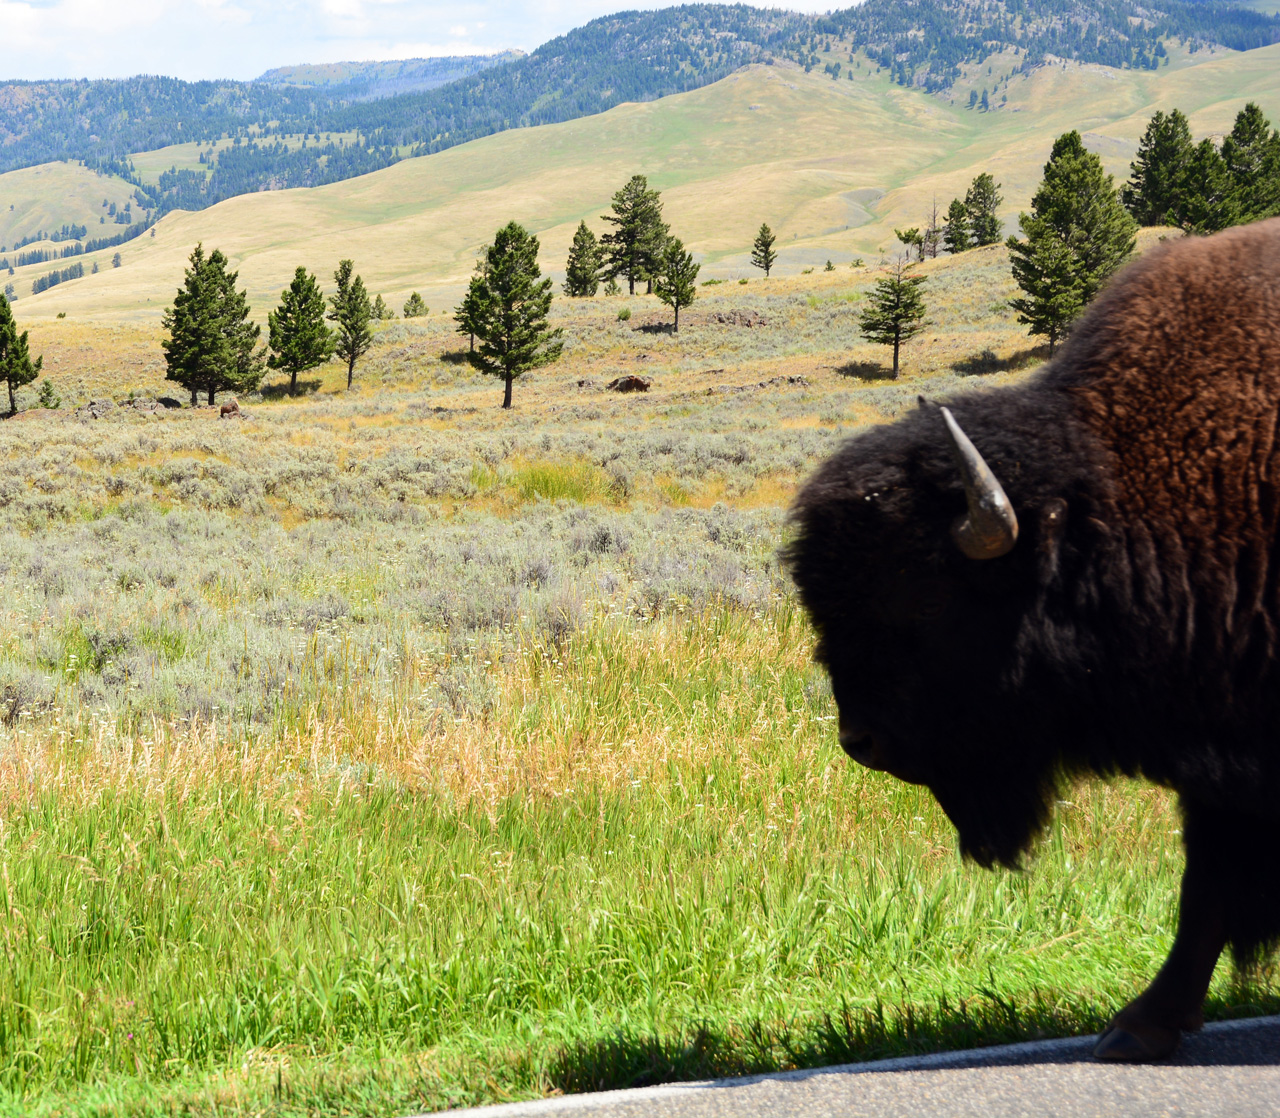 2015-07-26, 070, Yellowstone NP, WY, Buffalo on Road